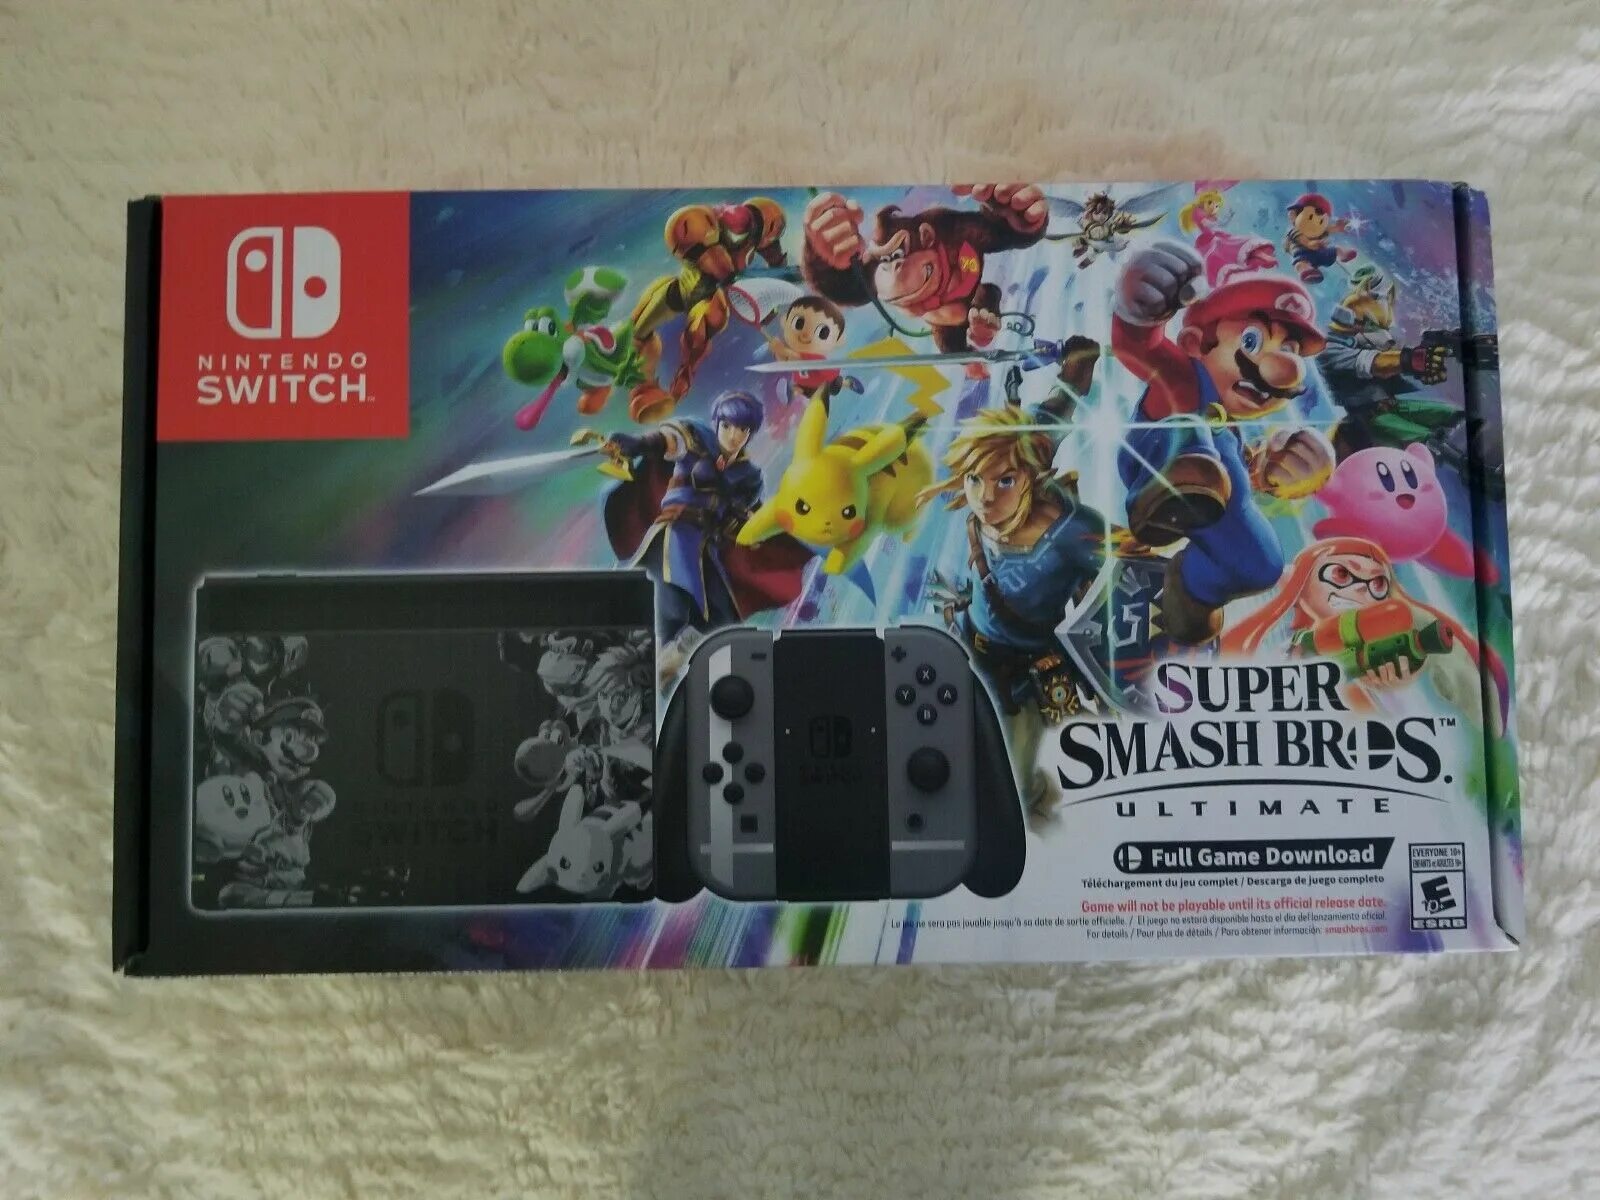 Super Smash Bros Ultimate Nintendo Switch. Super Smash Bros Nintendo Switch. Nintendo Switch super Smash Bros Ultimate Edition. Super Smash Bros Ultimate Limited Edition Nintendo Switch.